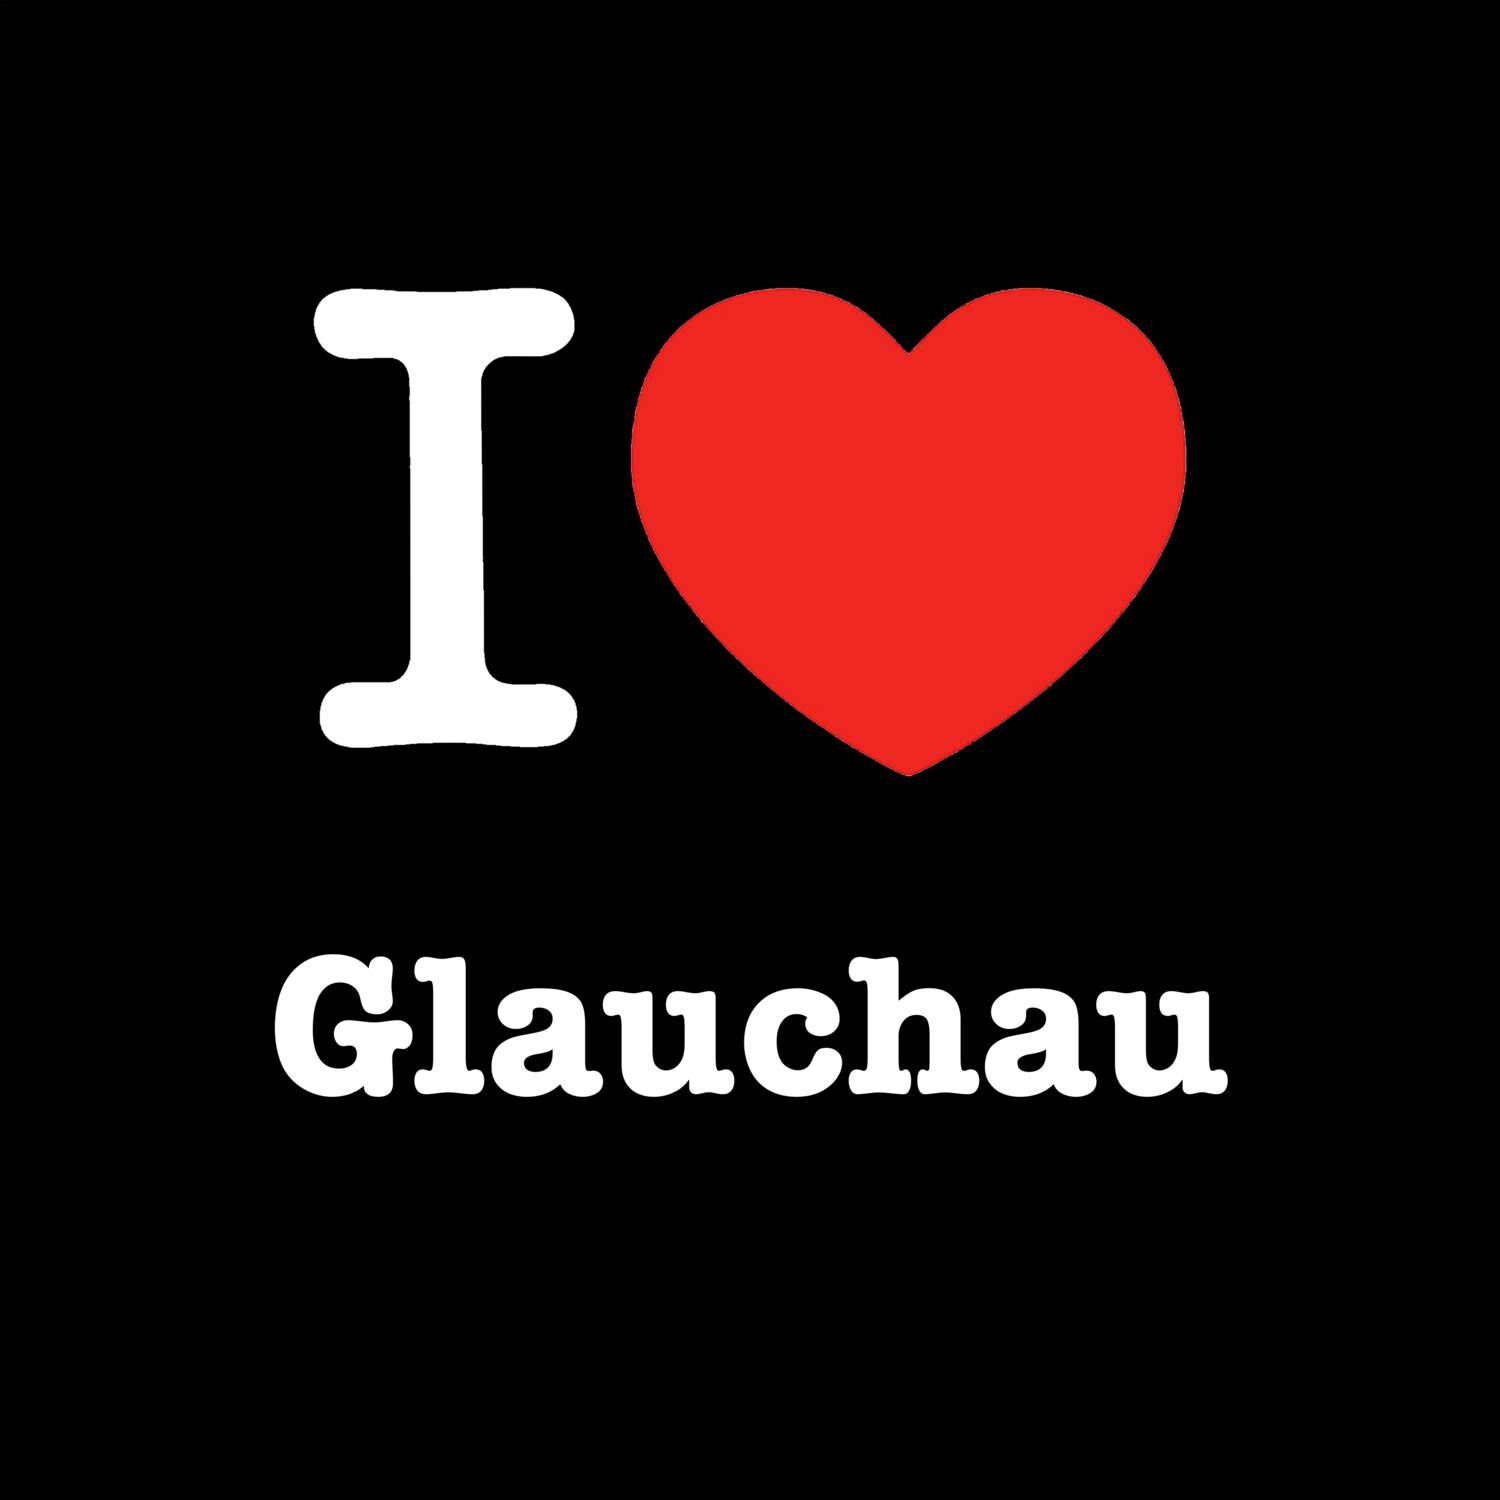 Glauchau T-Shirt »I love«